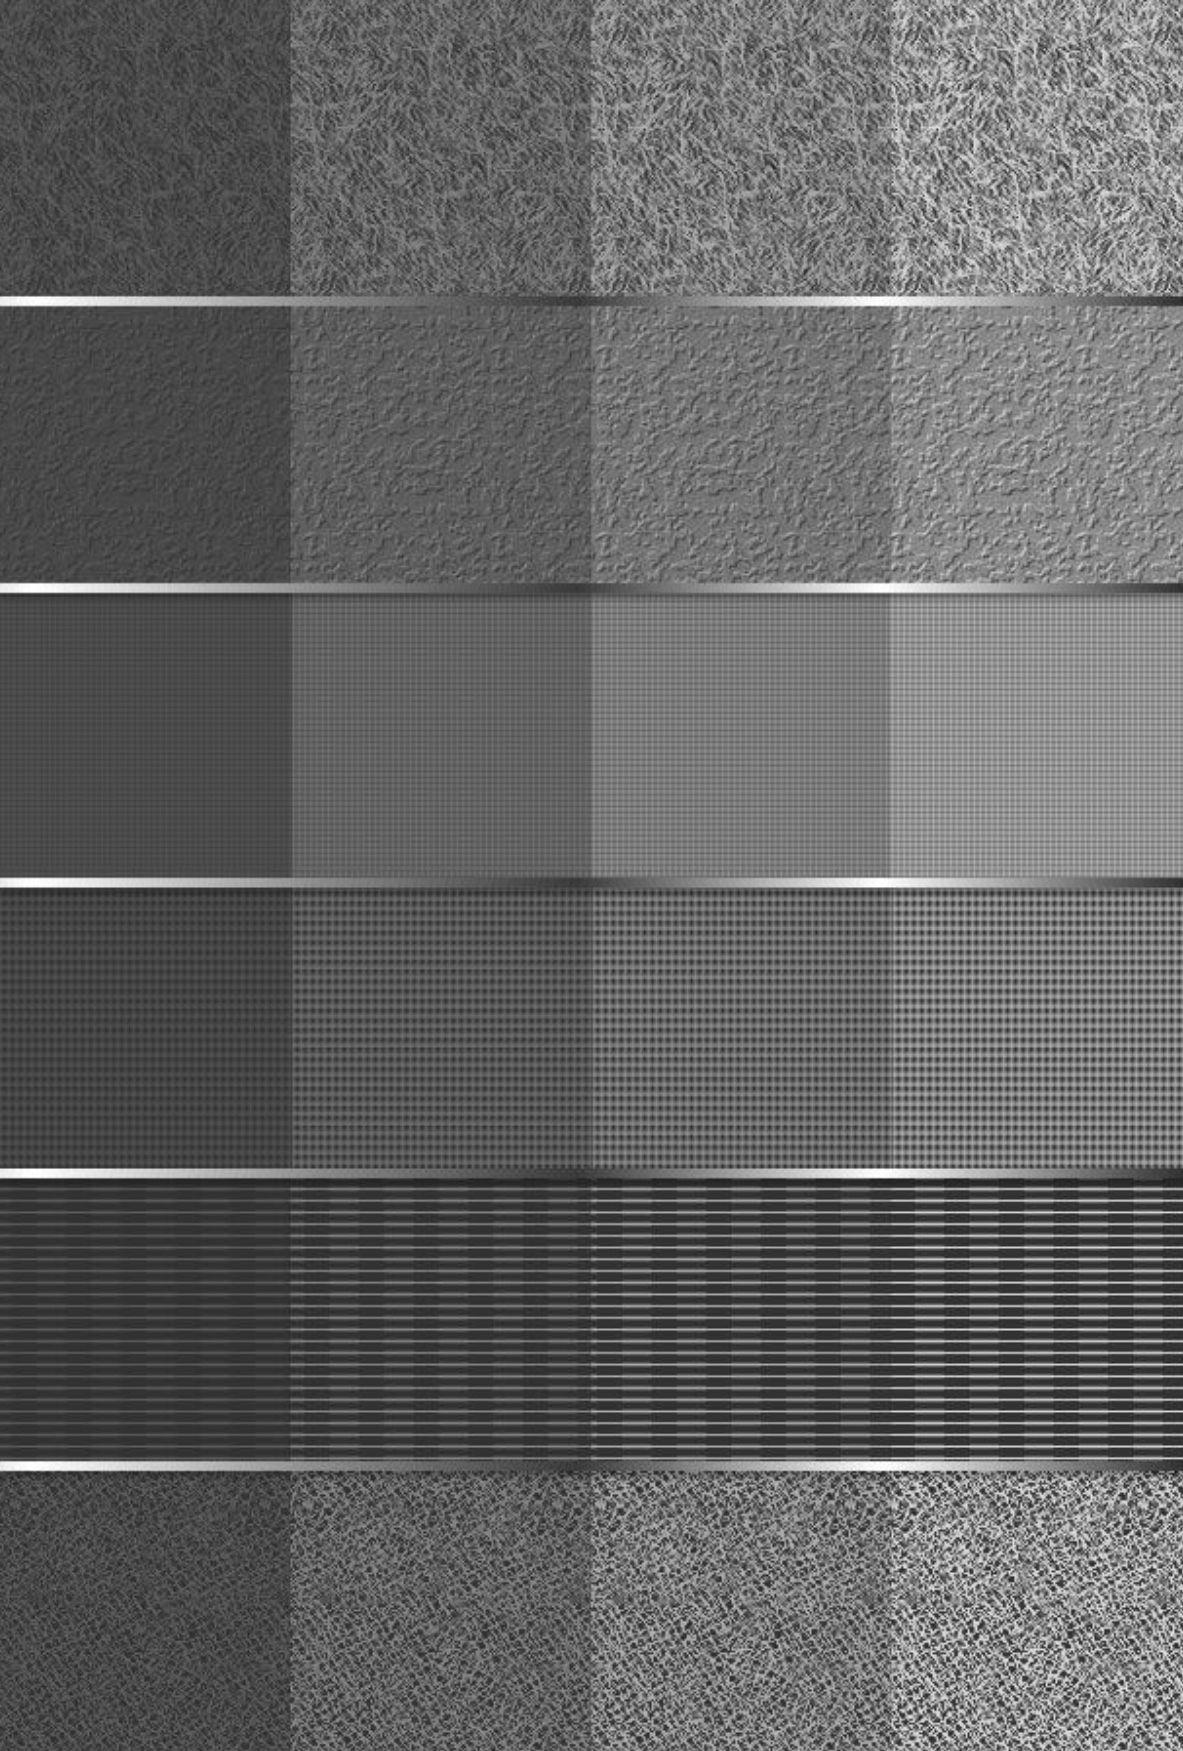 Grey Silver Chrome Shelf Wallpaper. *Chrome, Textured, Steel, Suede